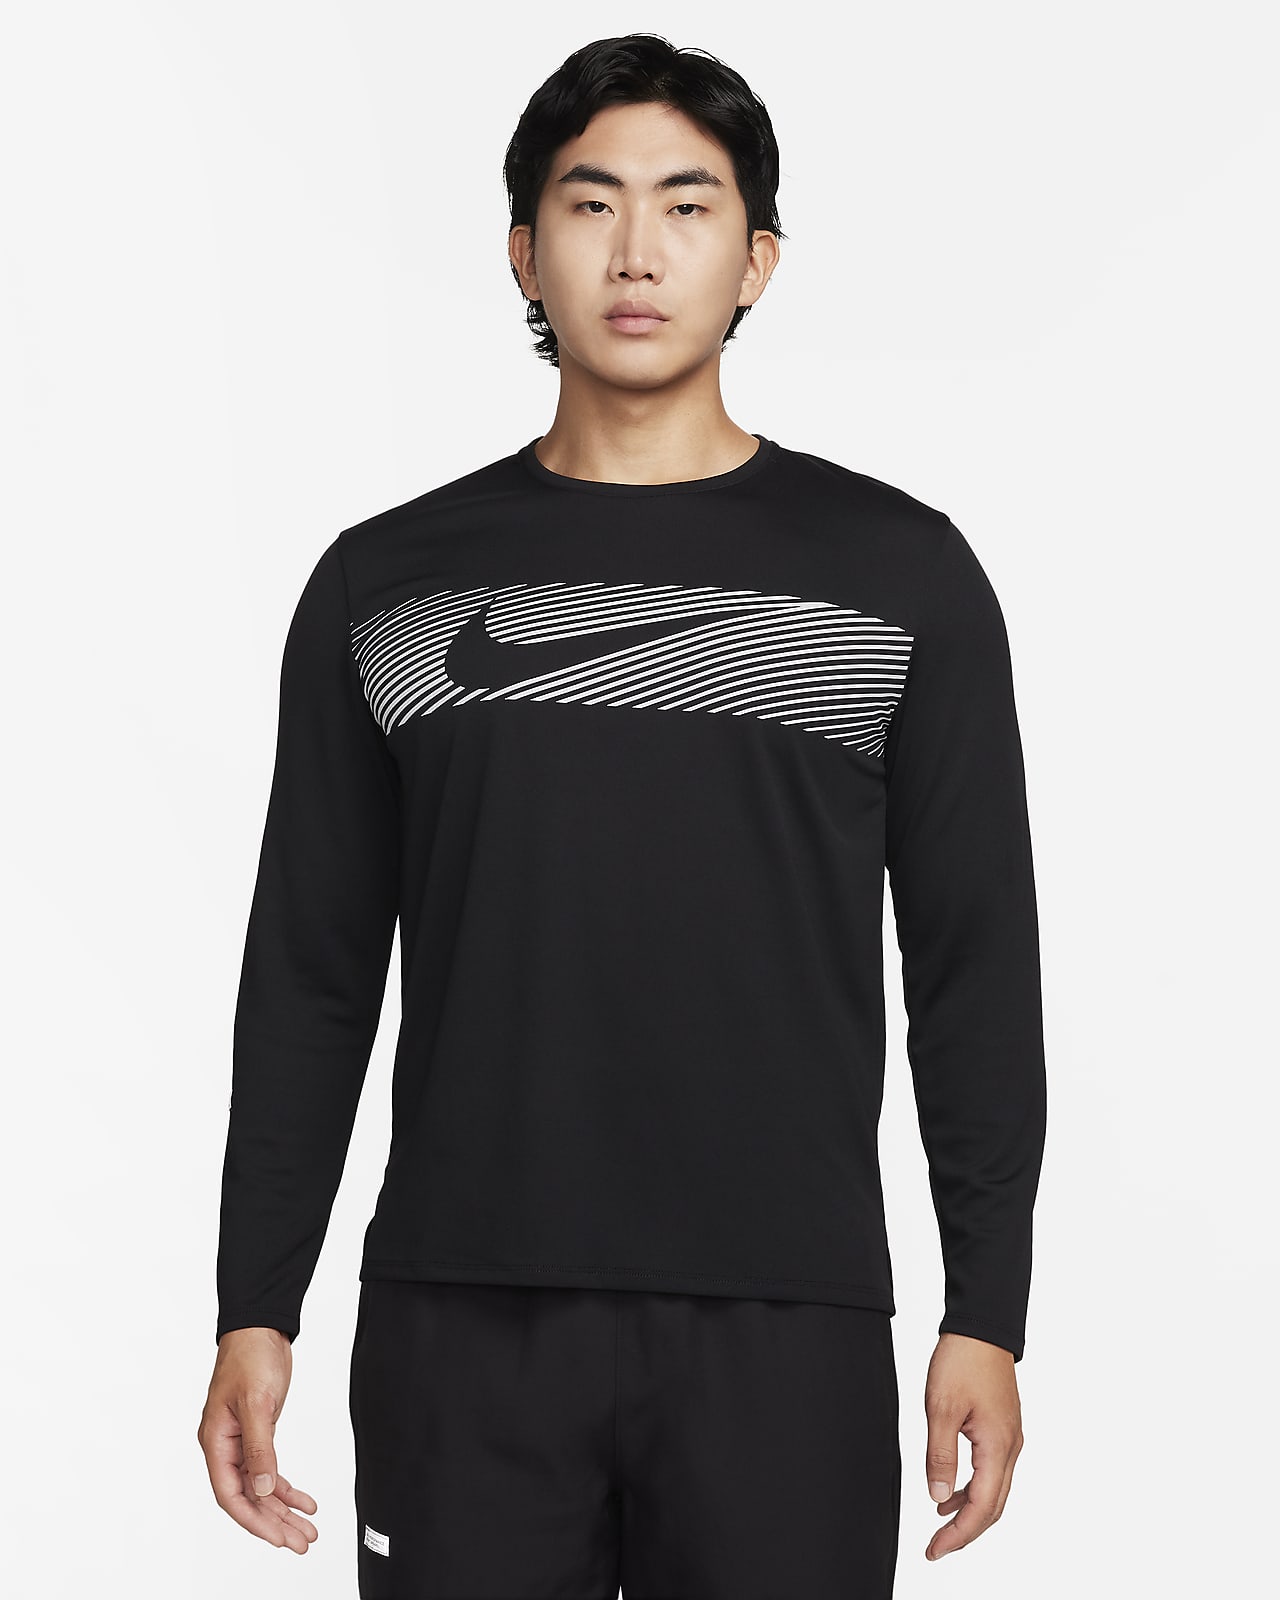 Nike Dri-Fit UV Solar Arm Sleeves - 1 Pair - Unisex - Adult : :  Sports & Outdoors